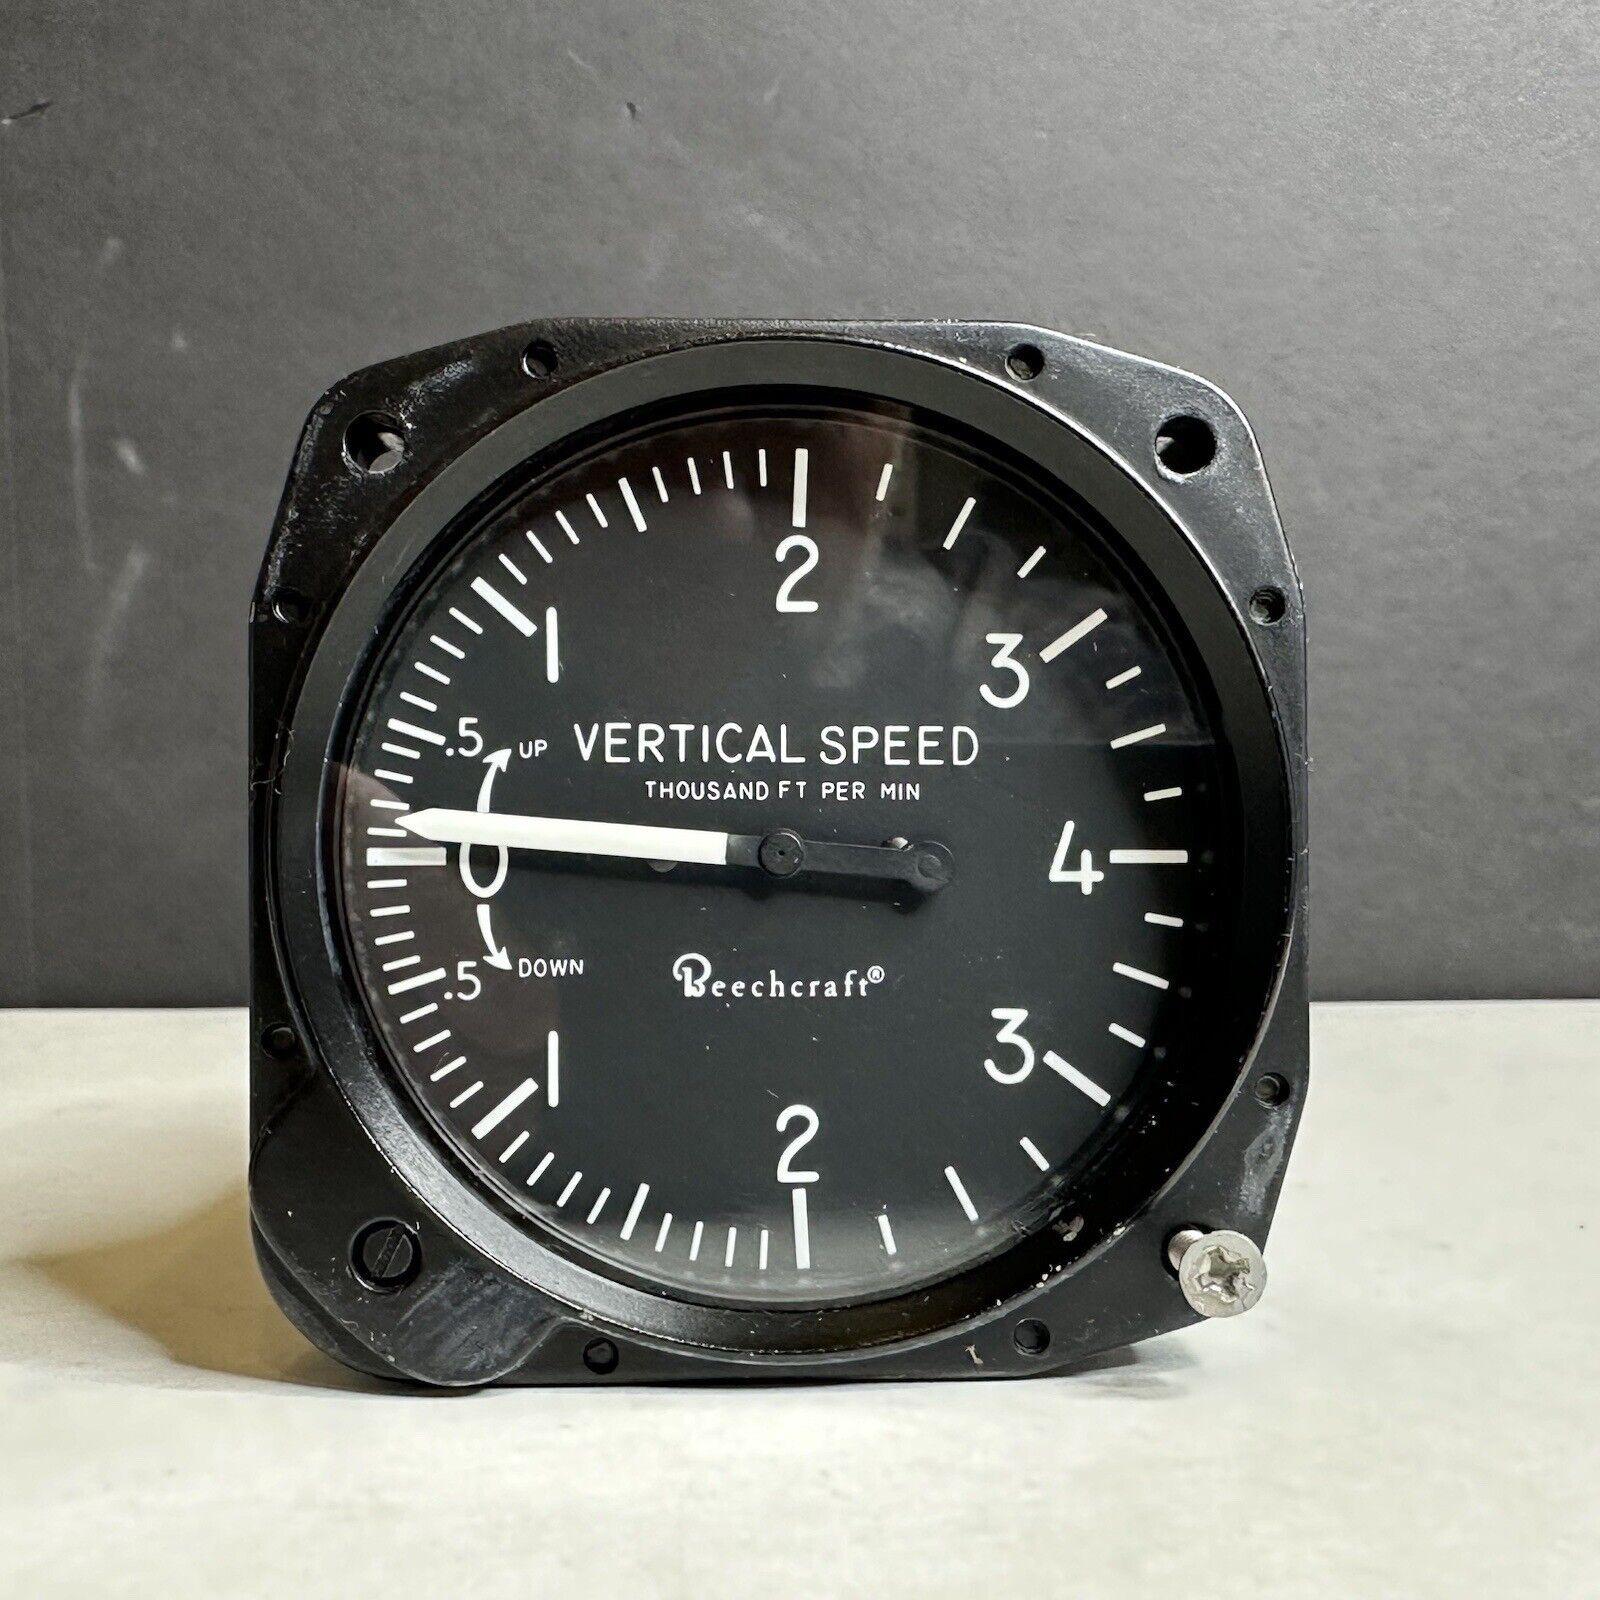 United Instruments 7040 Vertical Speed Indicator Beechcraft 50-384073